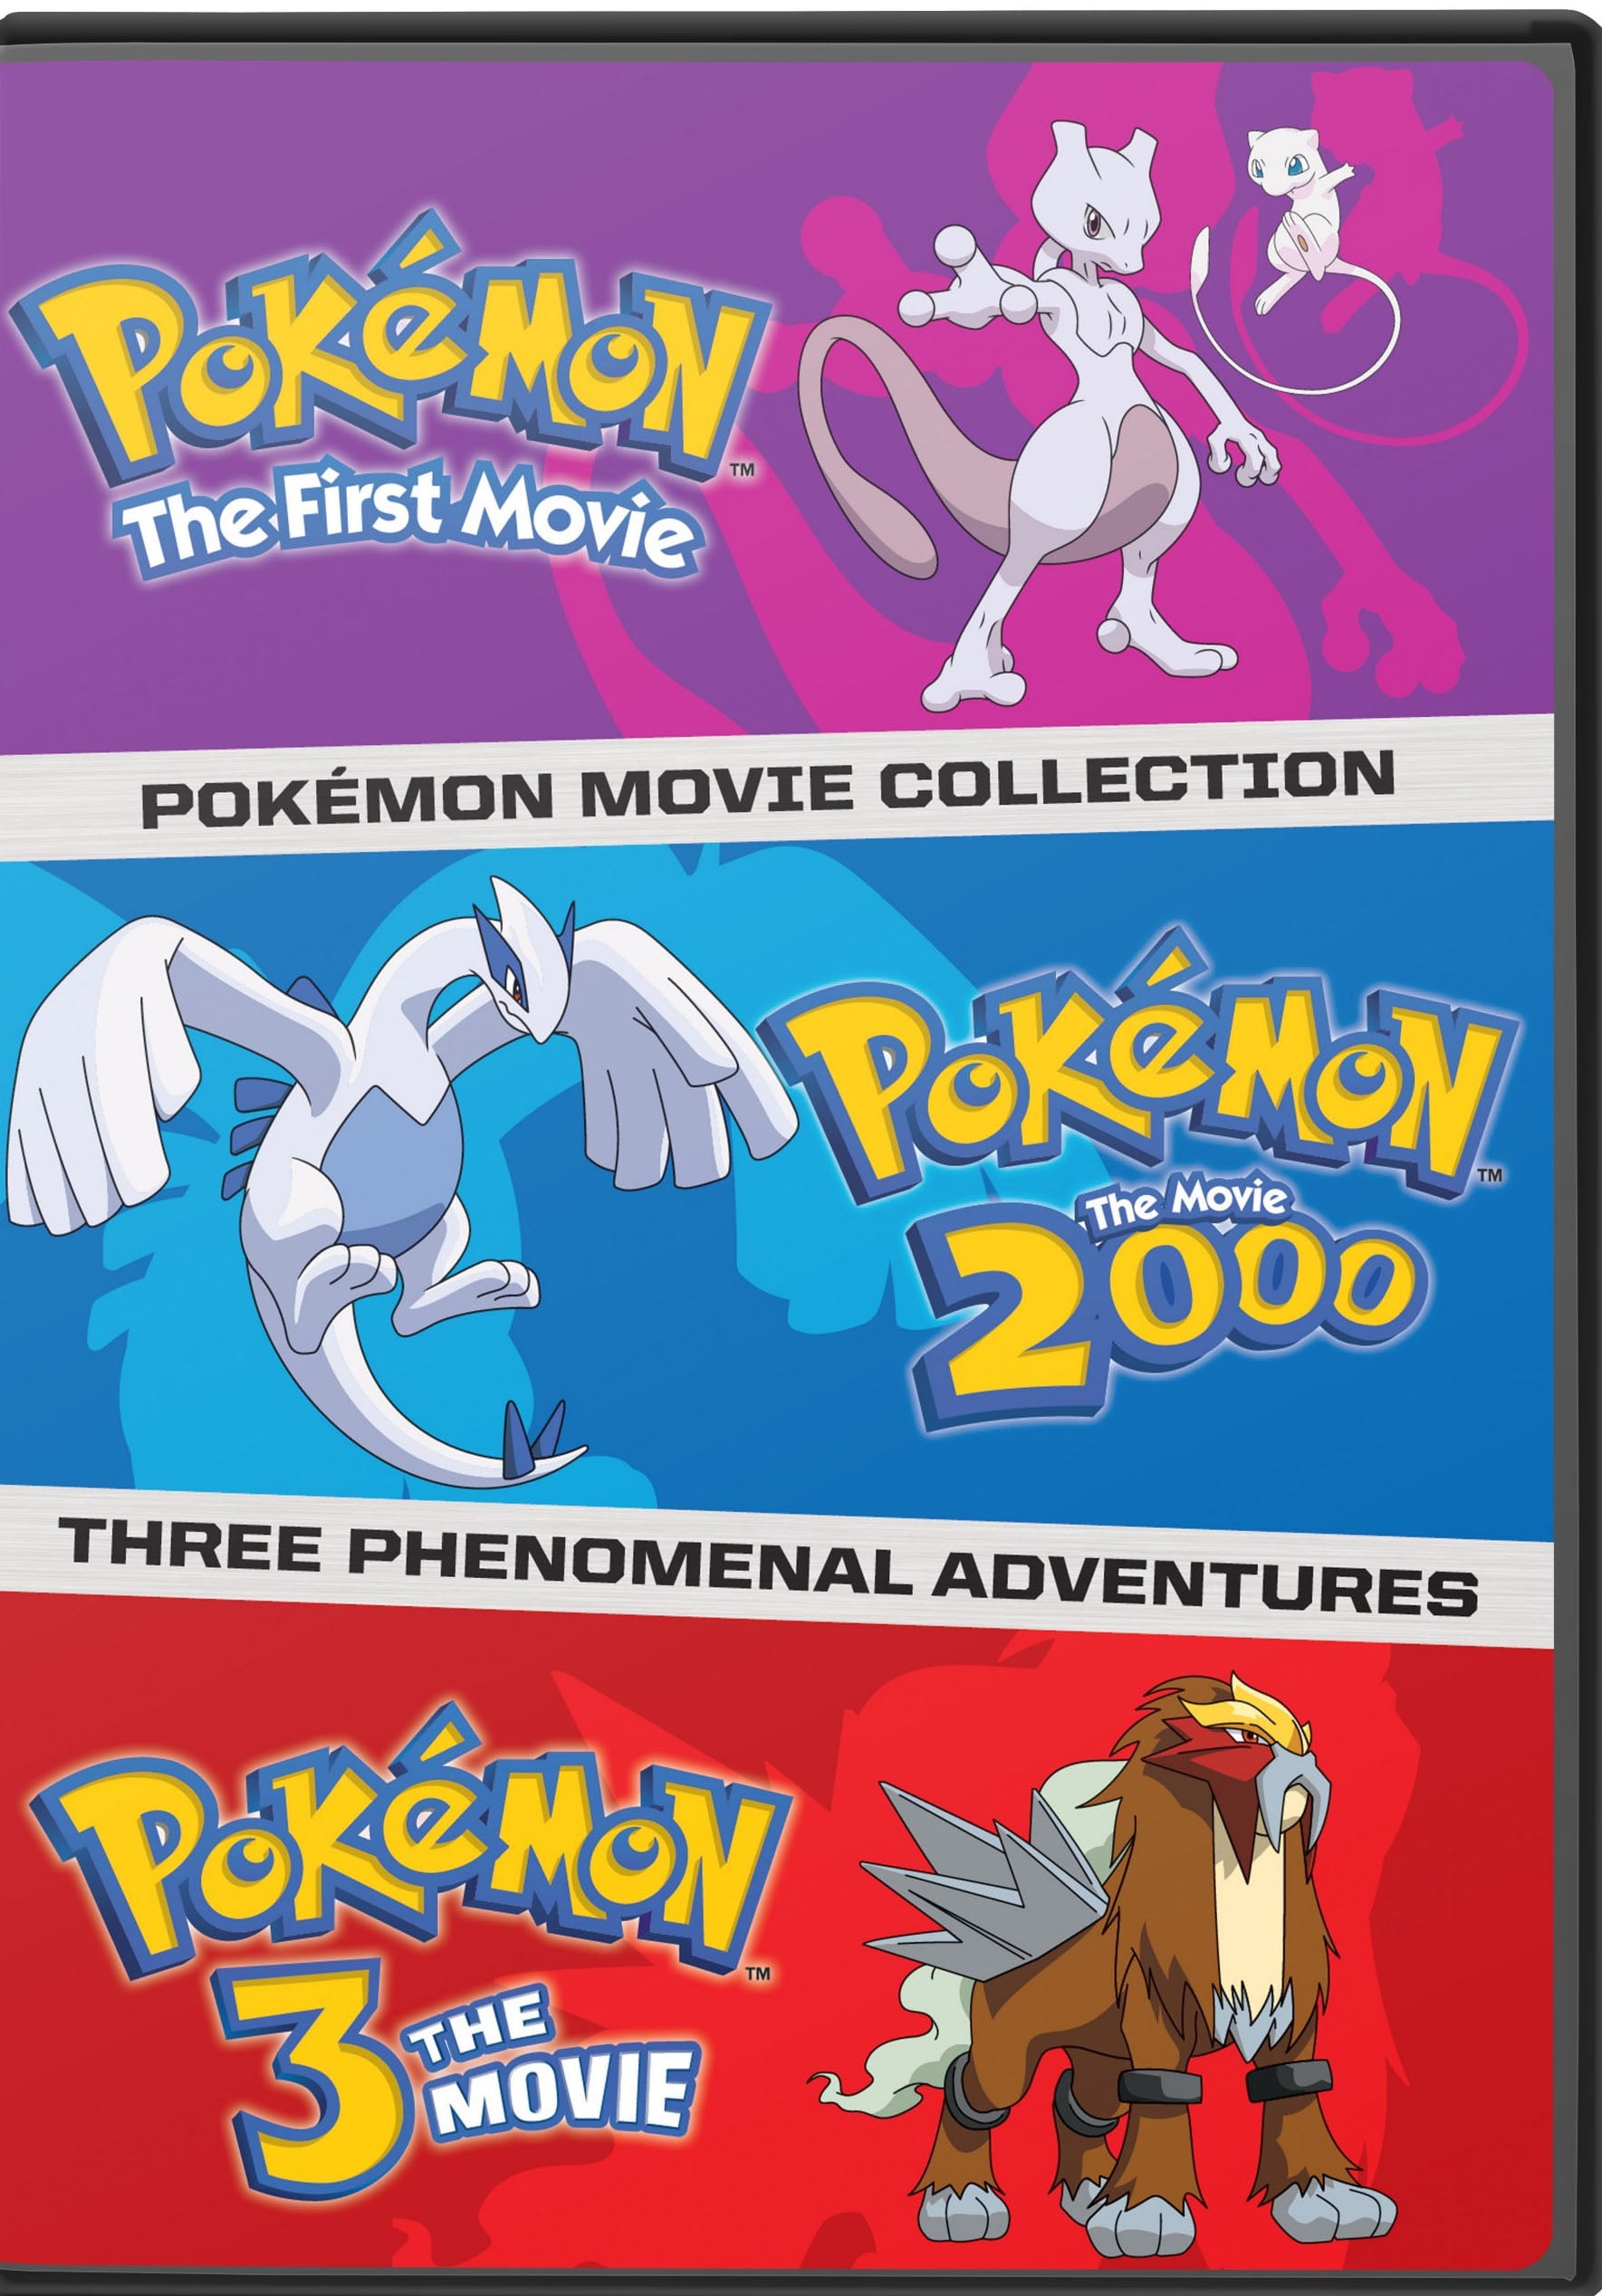 Pokemon Movie Collection (Pokemon The First Movie / Pokemon The Movie 2000 / Pokemon 3 The Movie) (DVD)